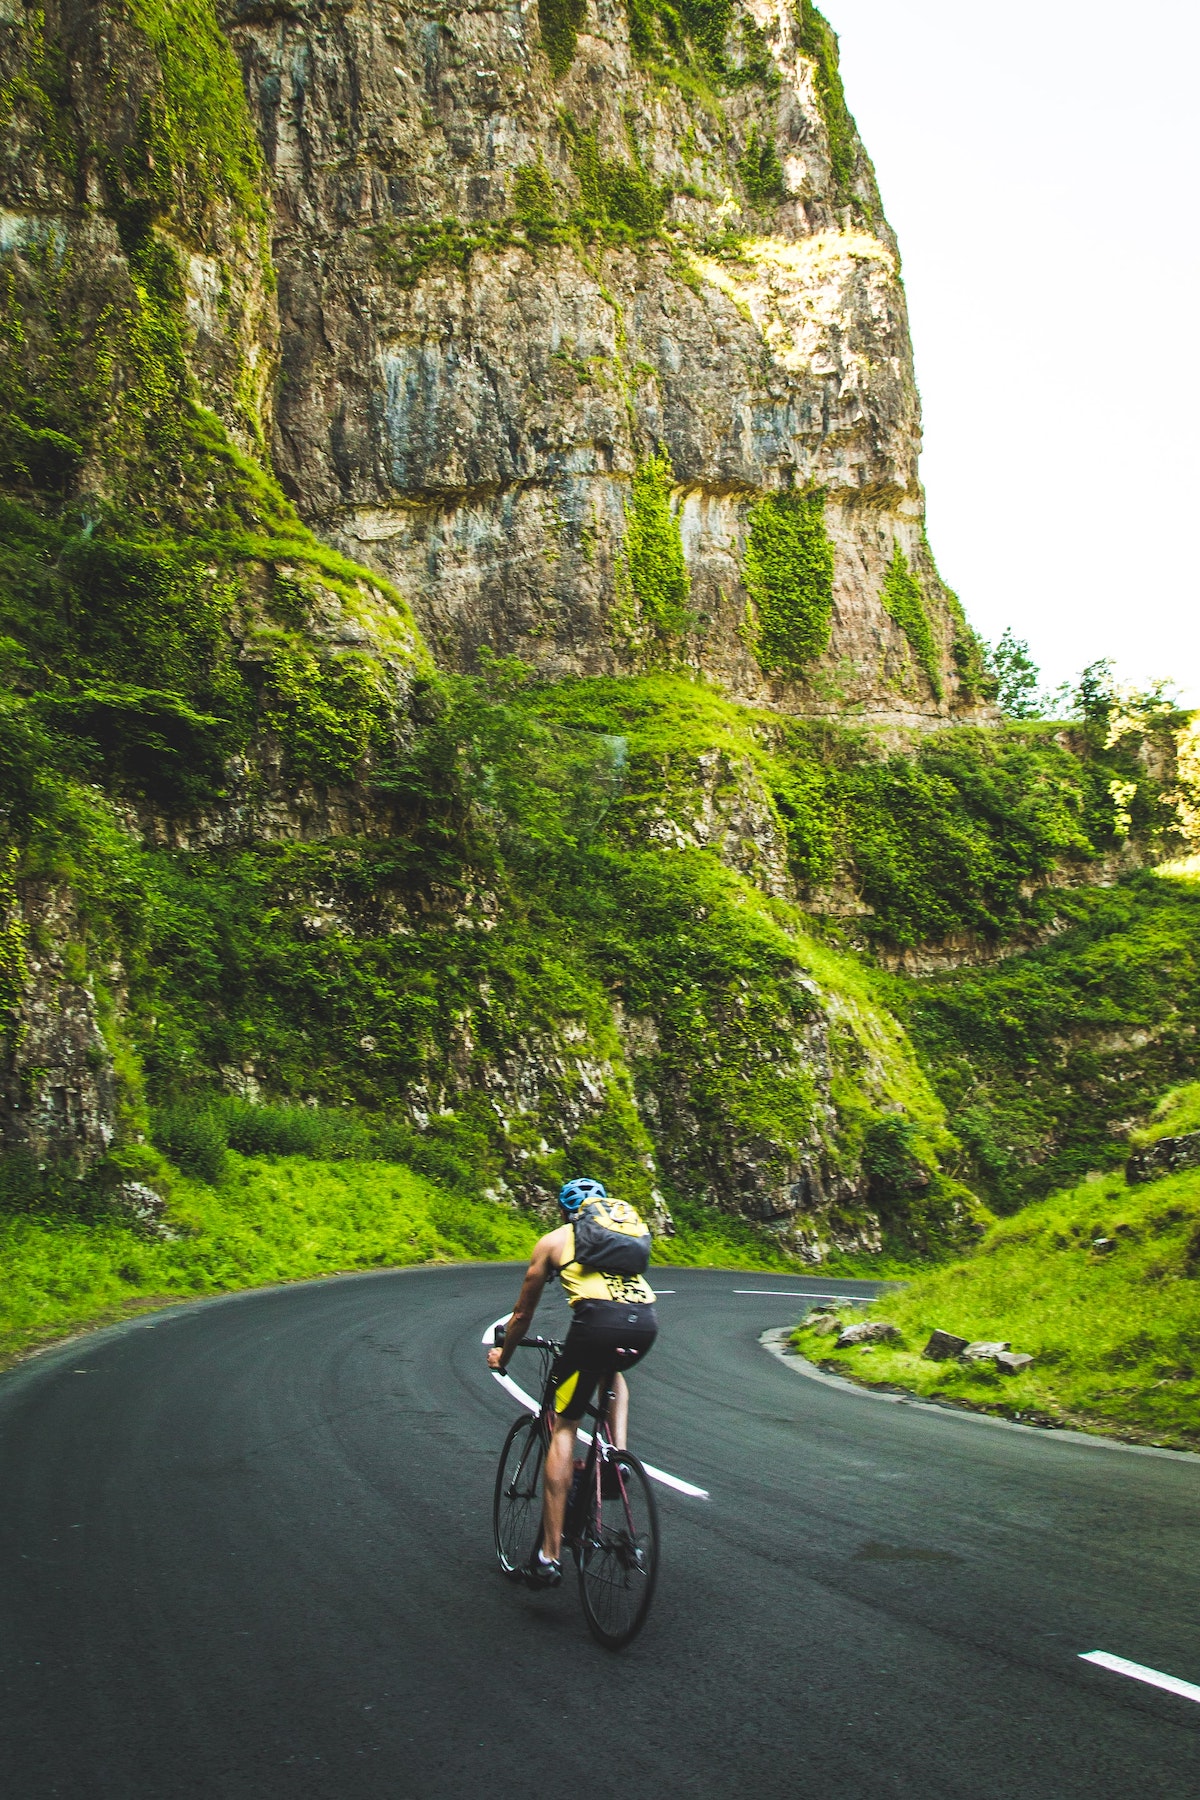 A cyclist wearing elastic waist shorts rides amidst green hills.